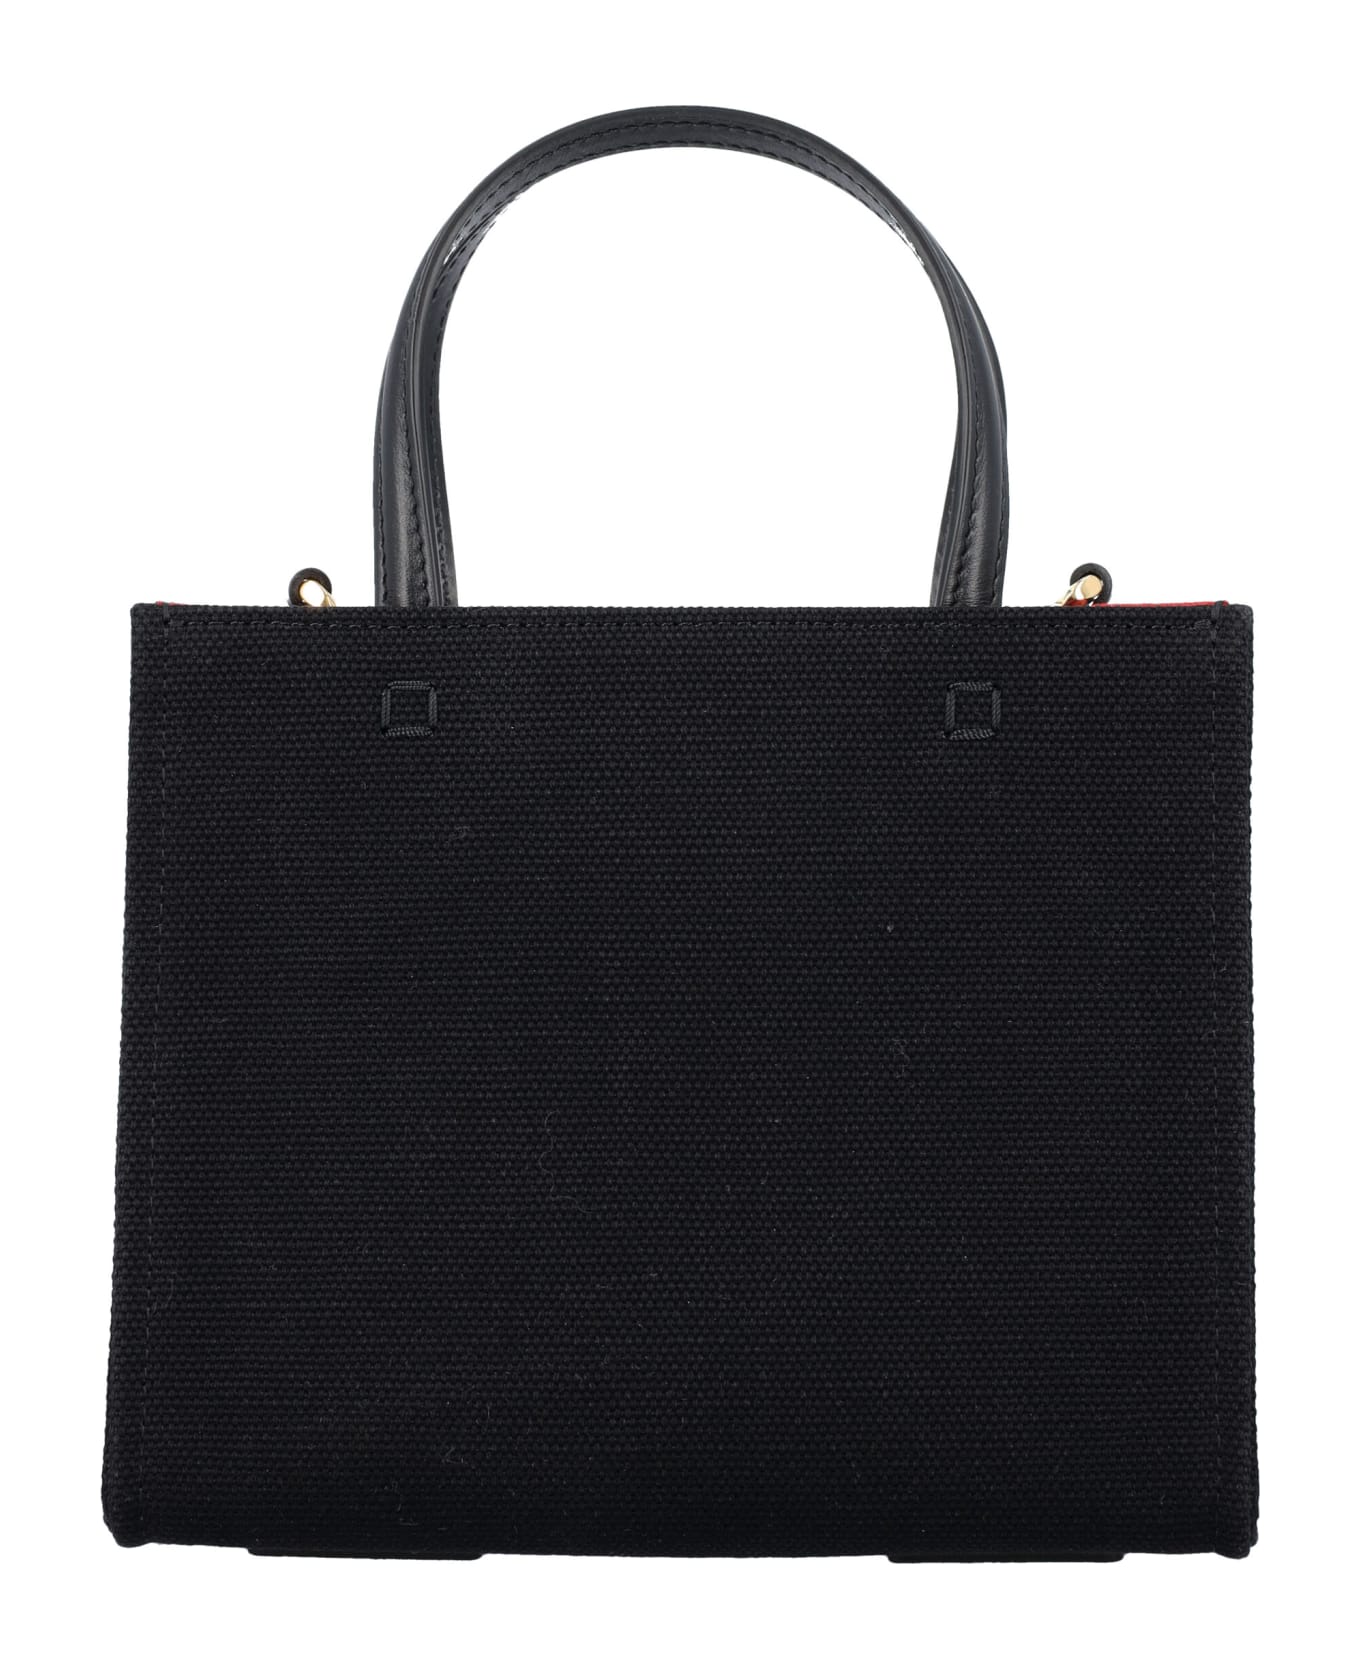 Givenchy G-tote Mini Tote Bag - BLACK